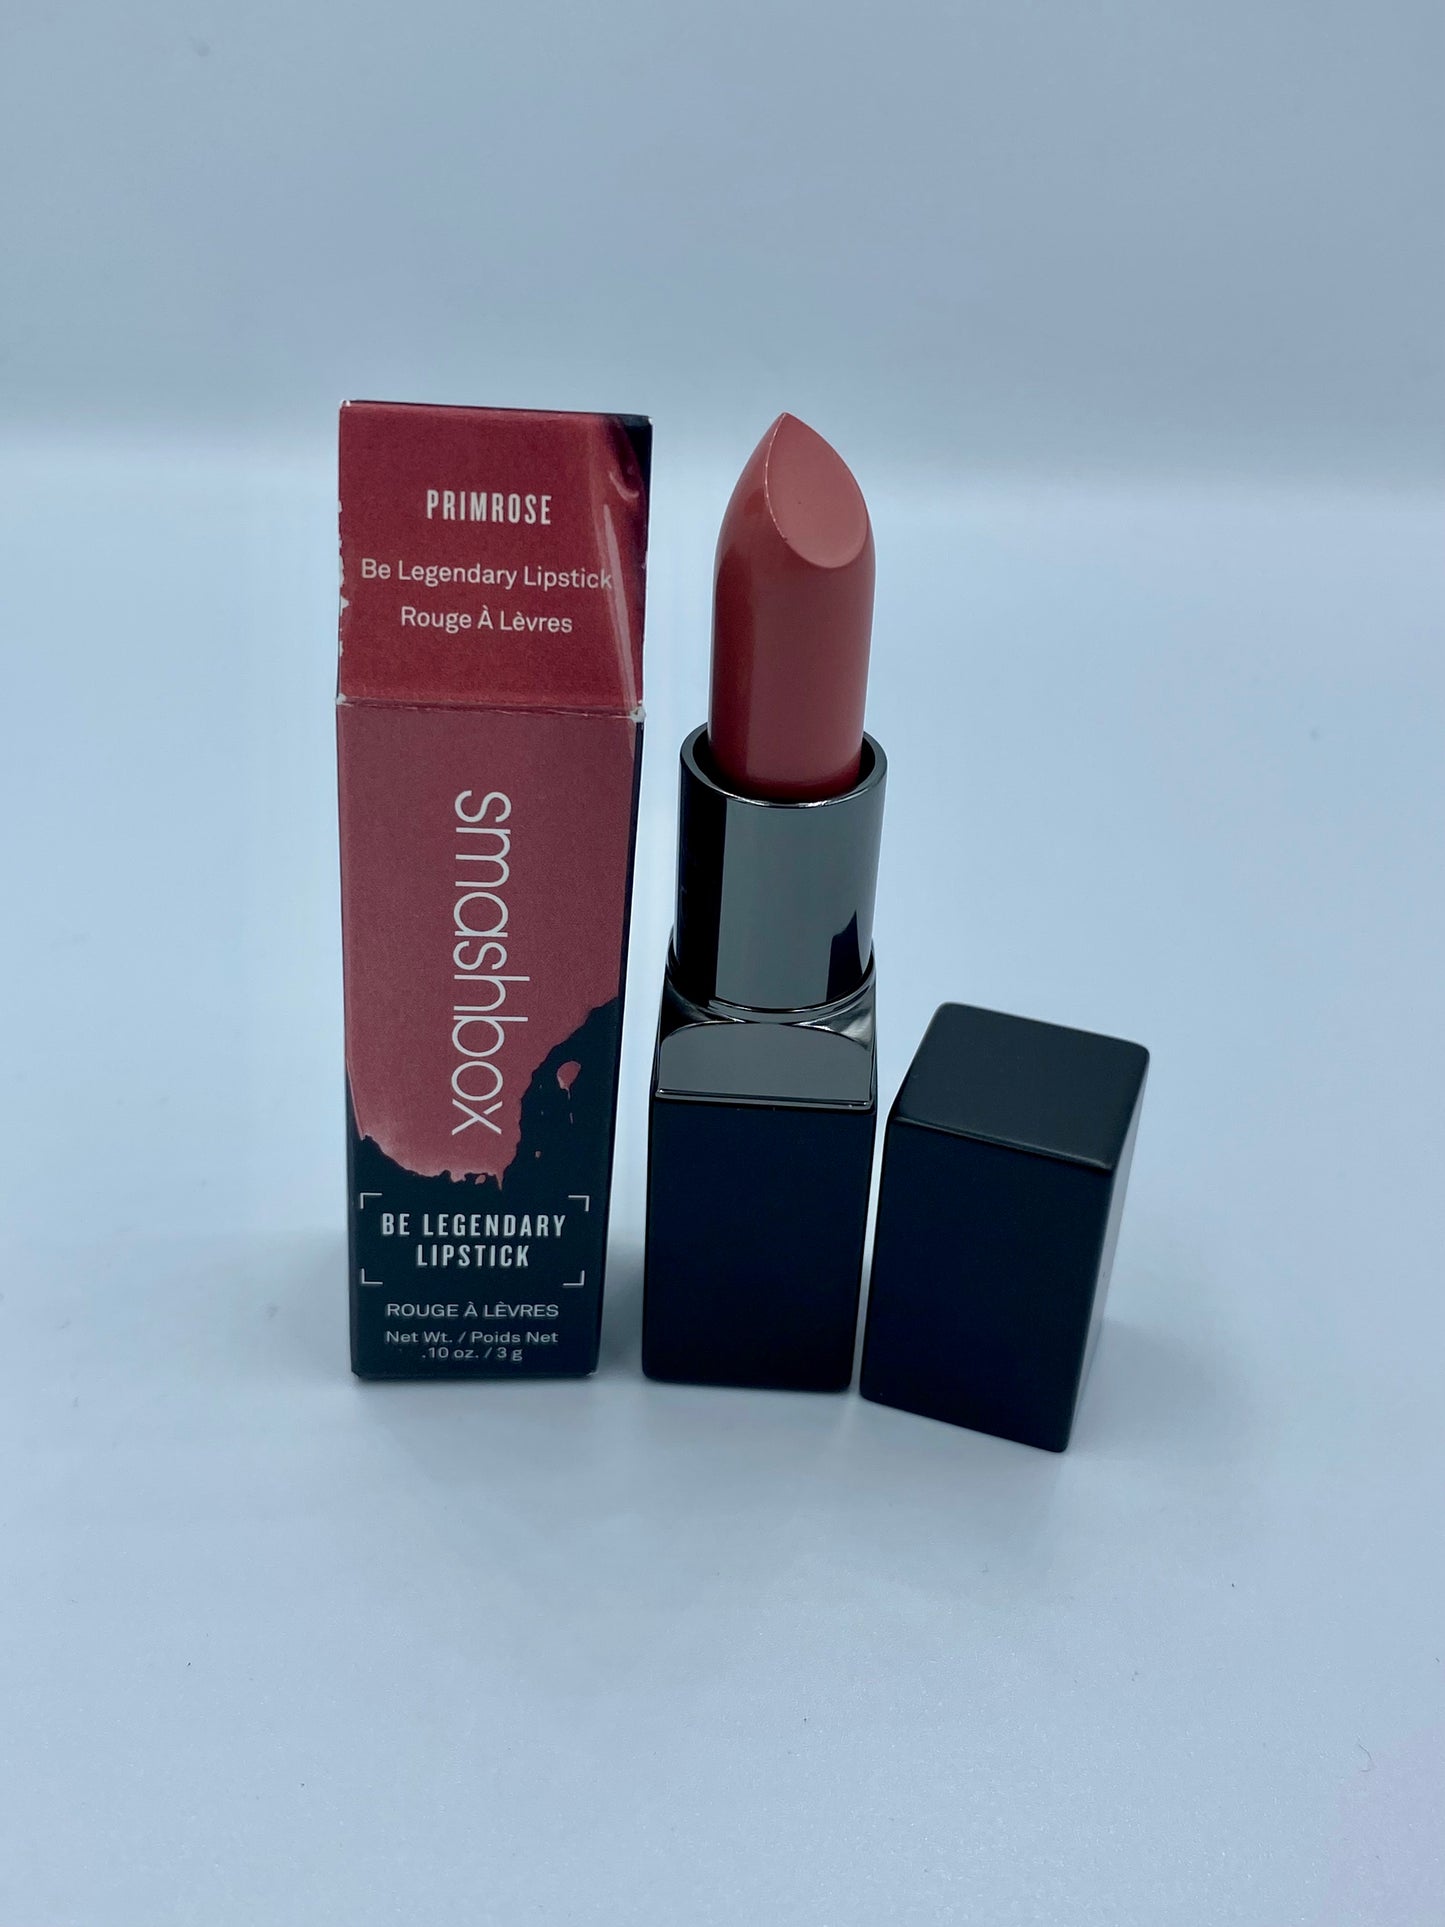 Smashbox Be Legendary Lipstick Shade: PRIMROSE